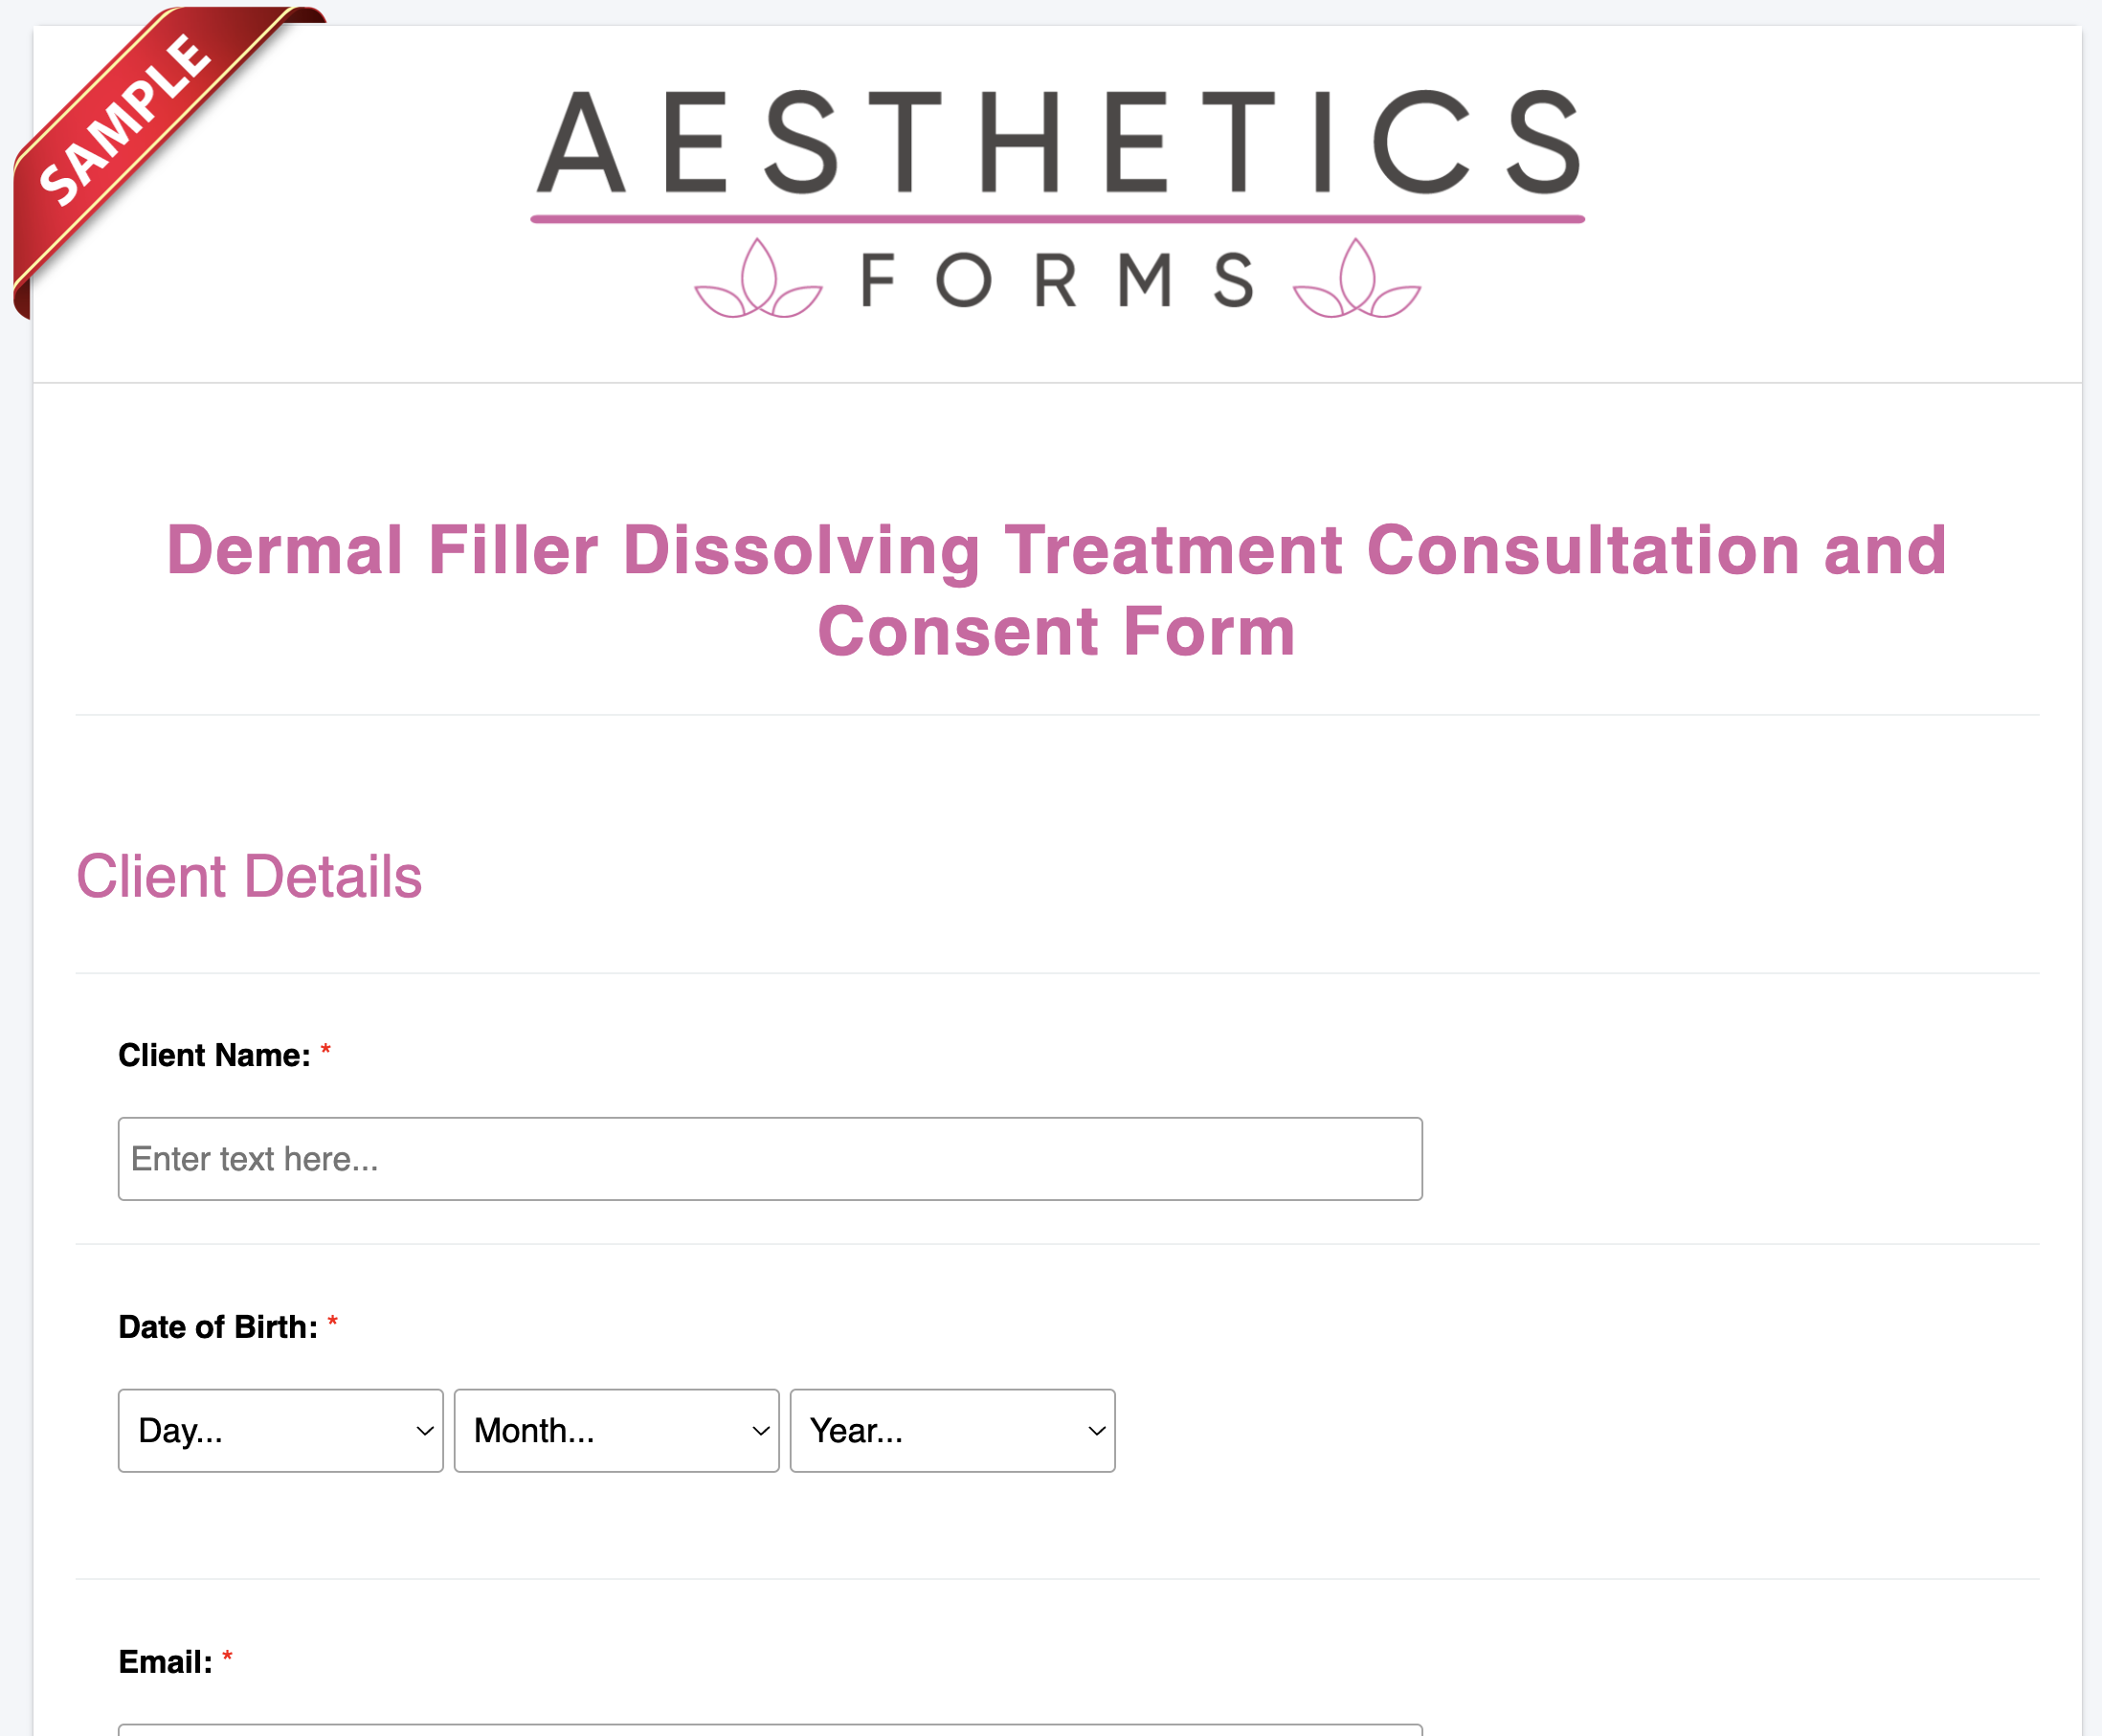 Dermal Filler Dissolving Treatment Consultation and Consent Form